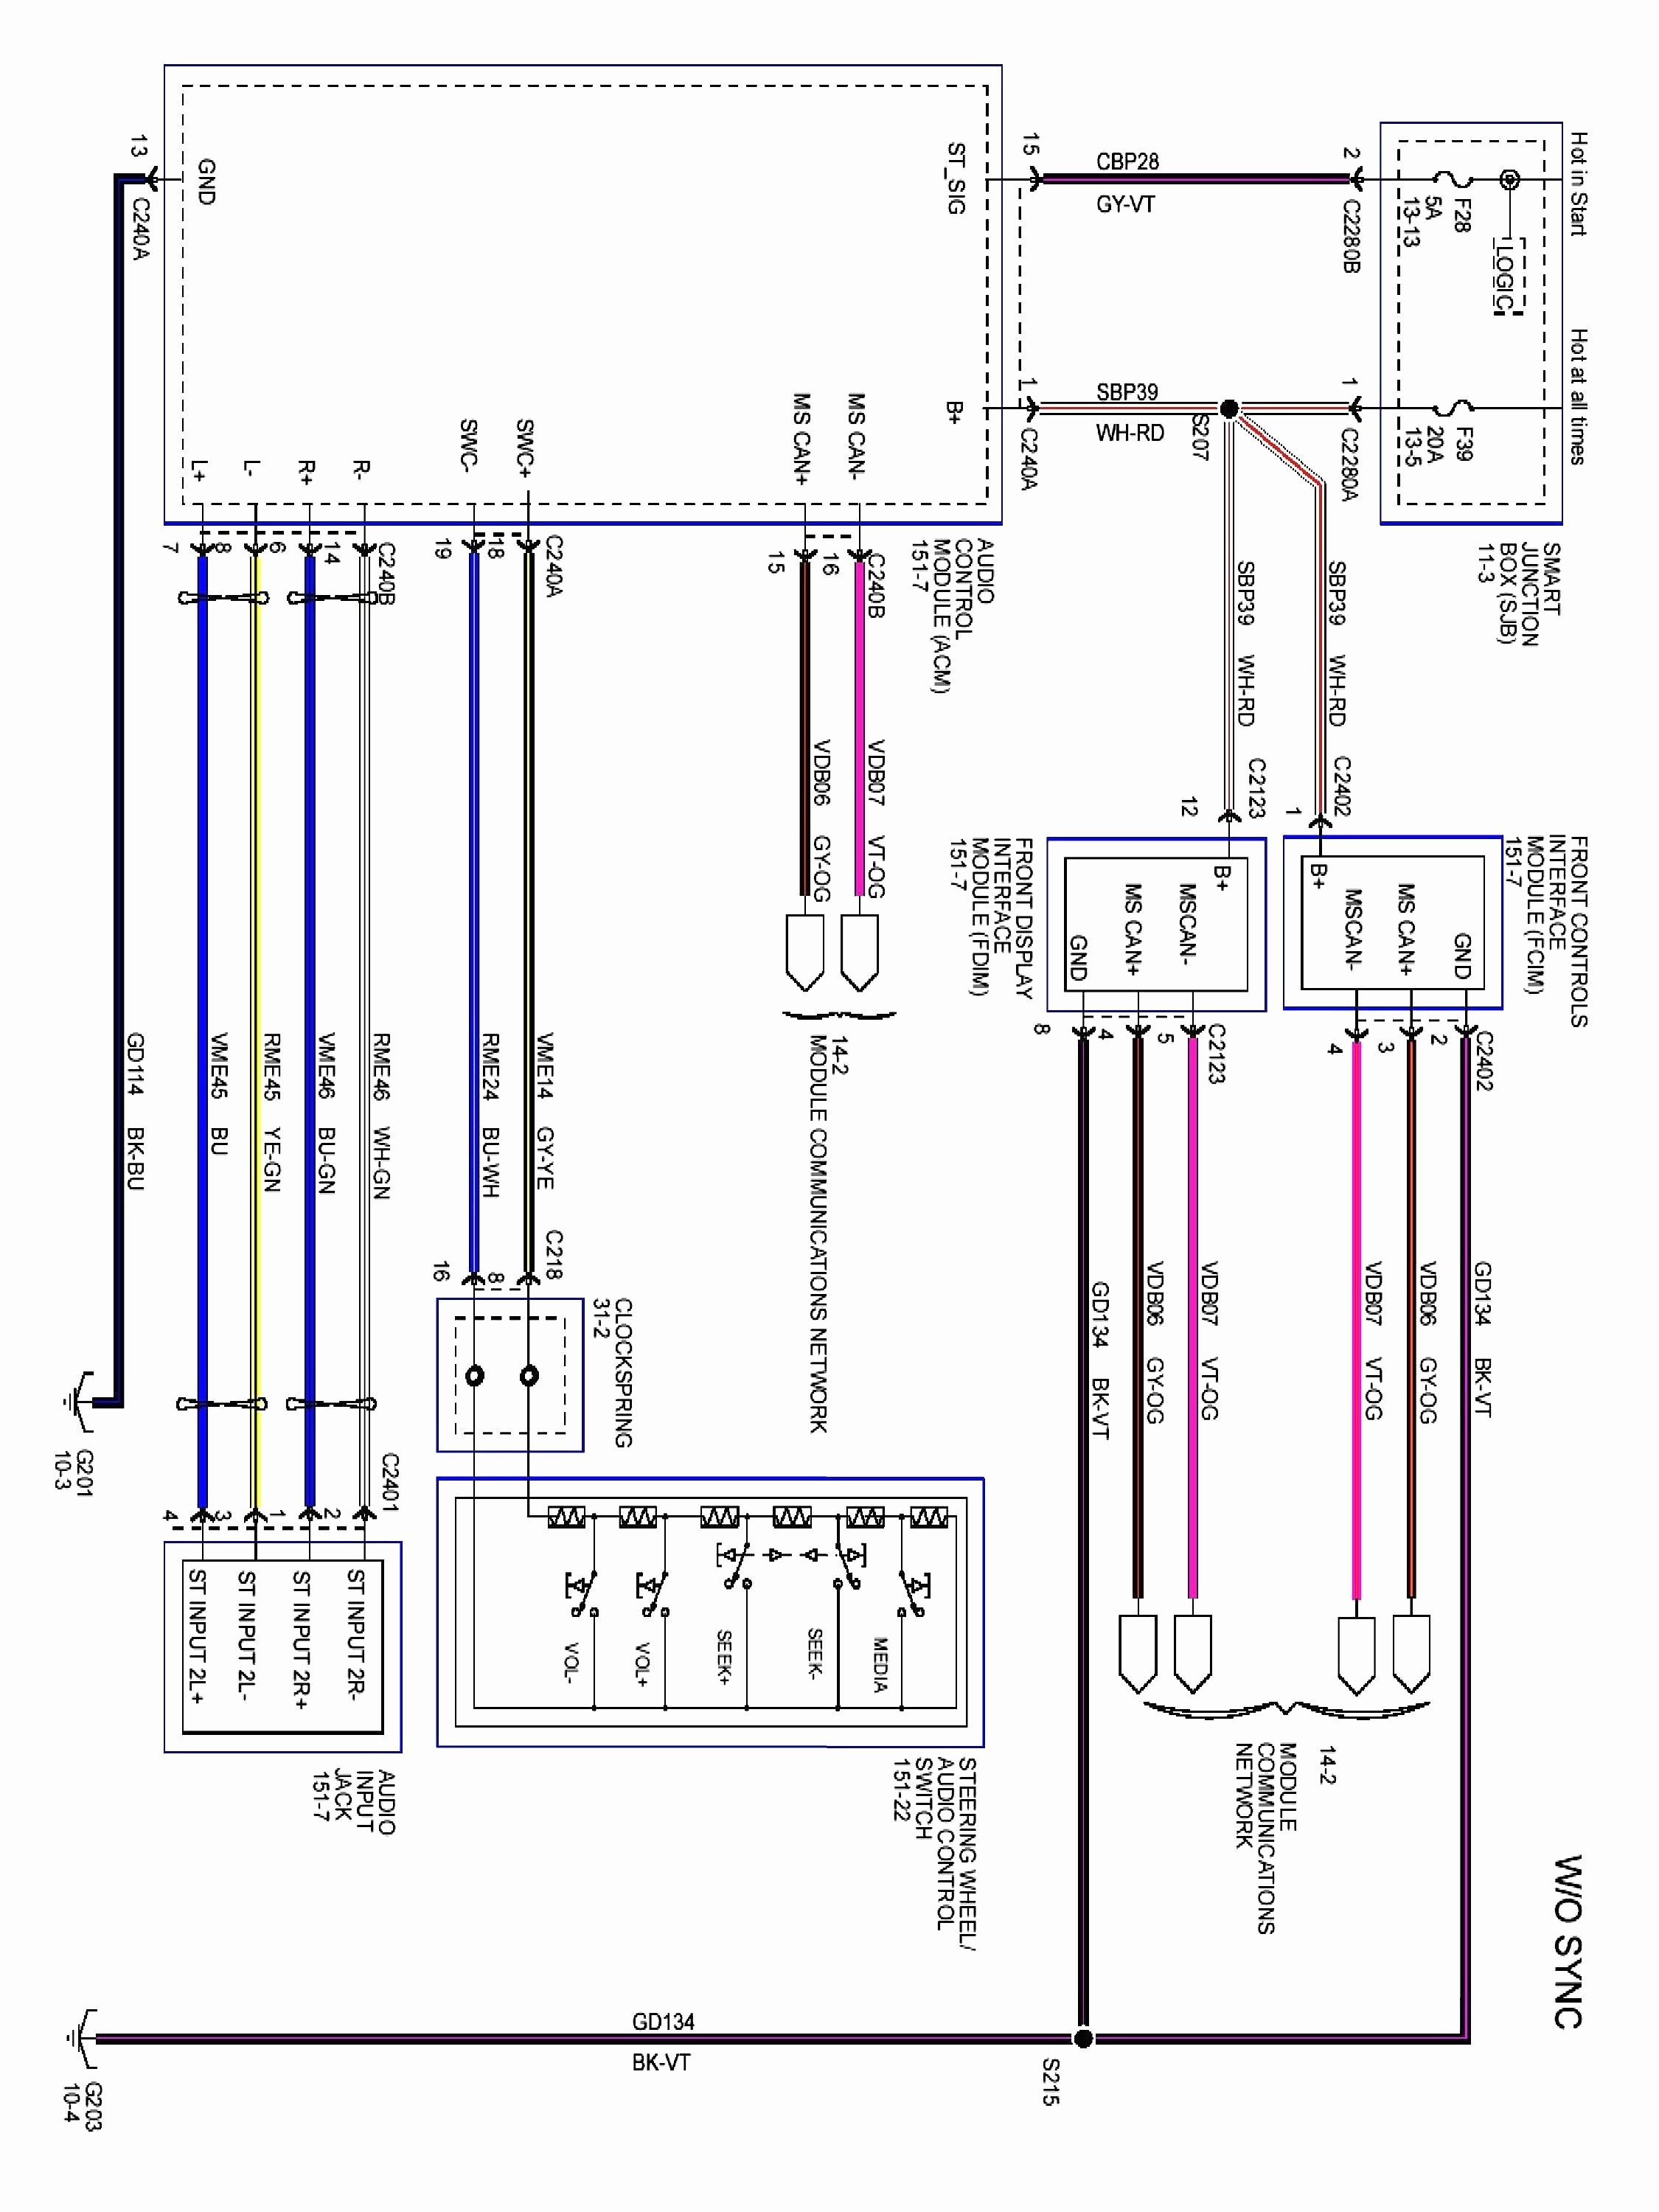 Chevy Silverado Wiring Diagram Reference 2006 Ford Expedition Wiring Diagram 0d – Wiring Diagram Collection